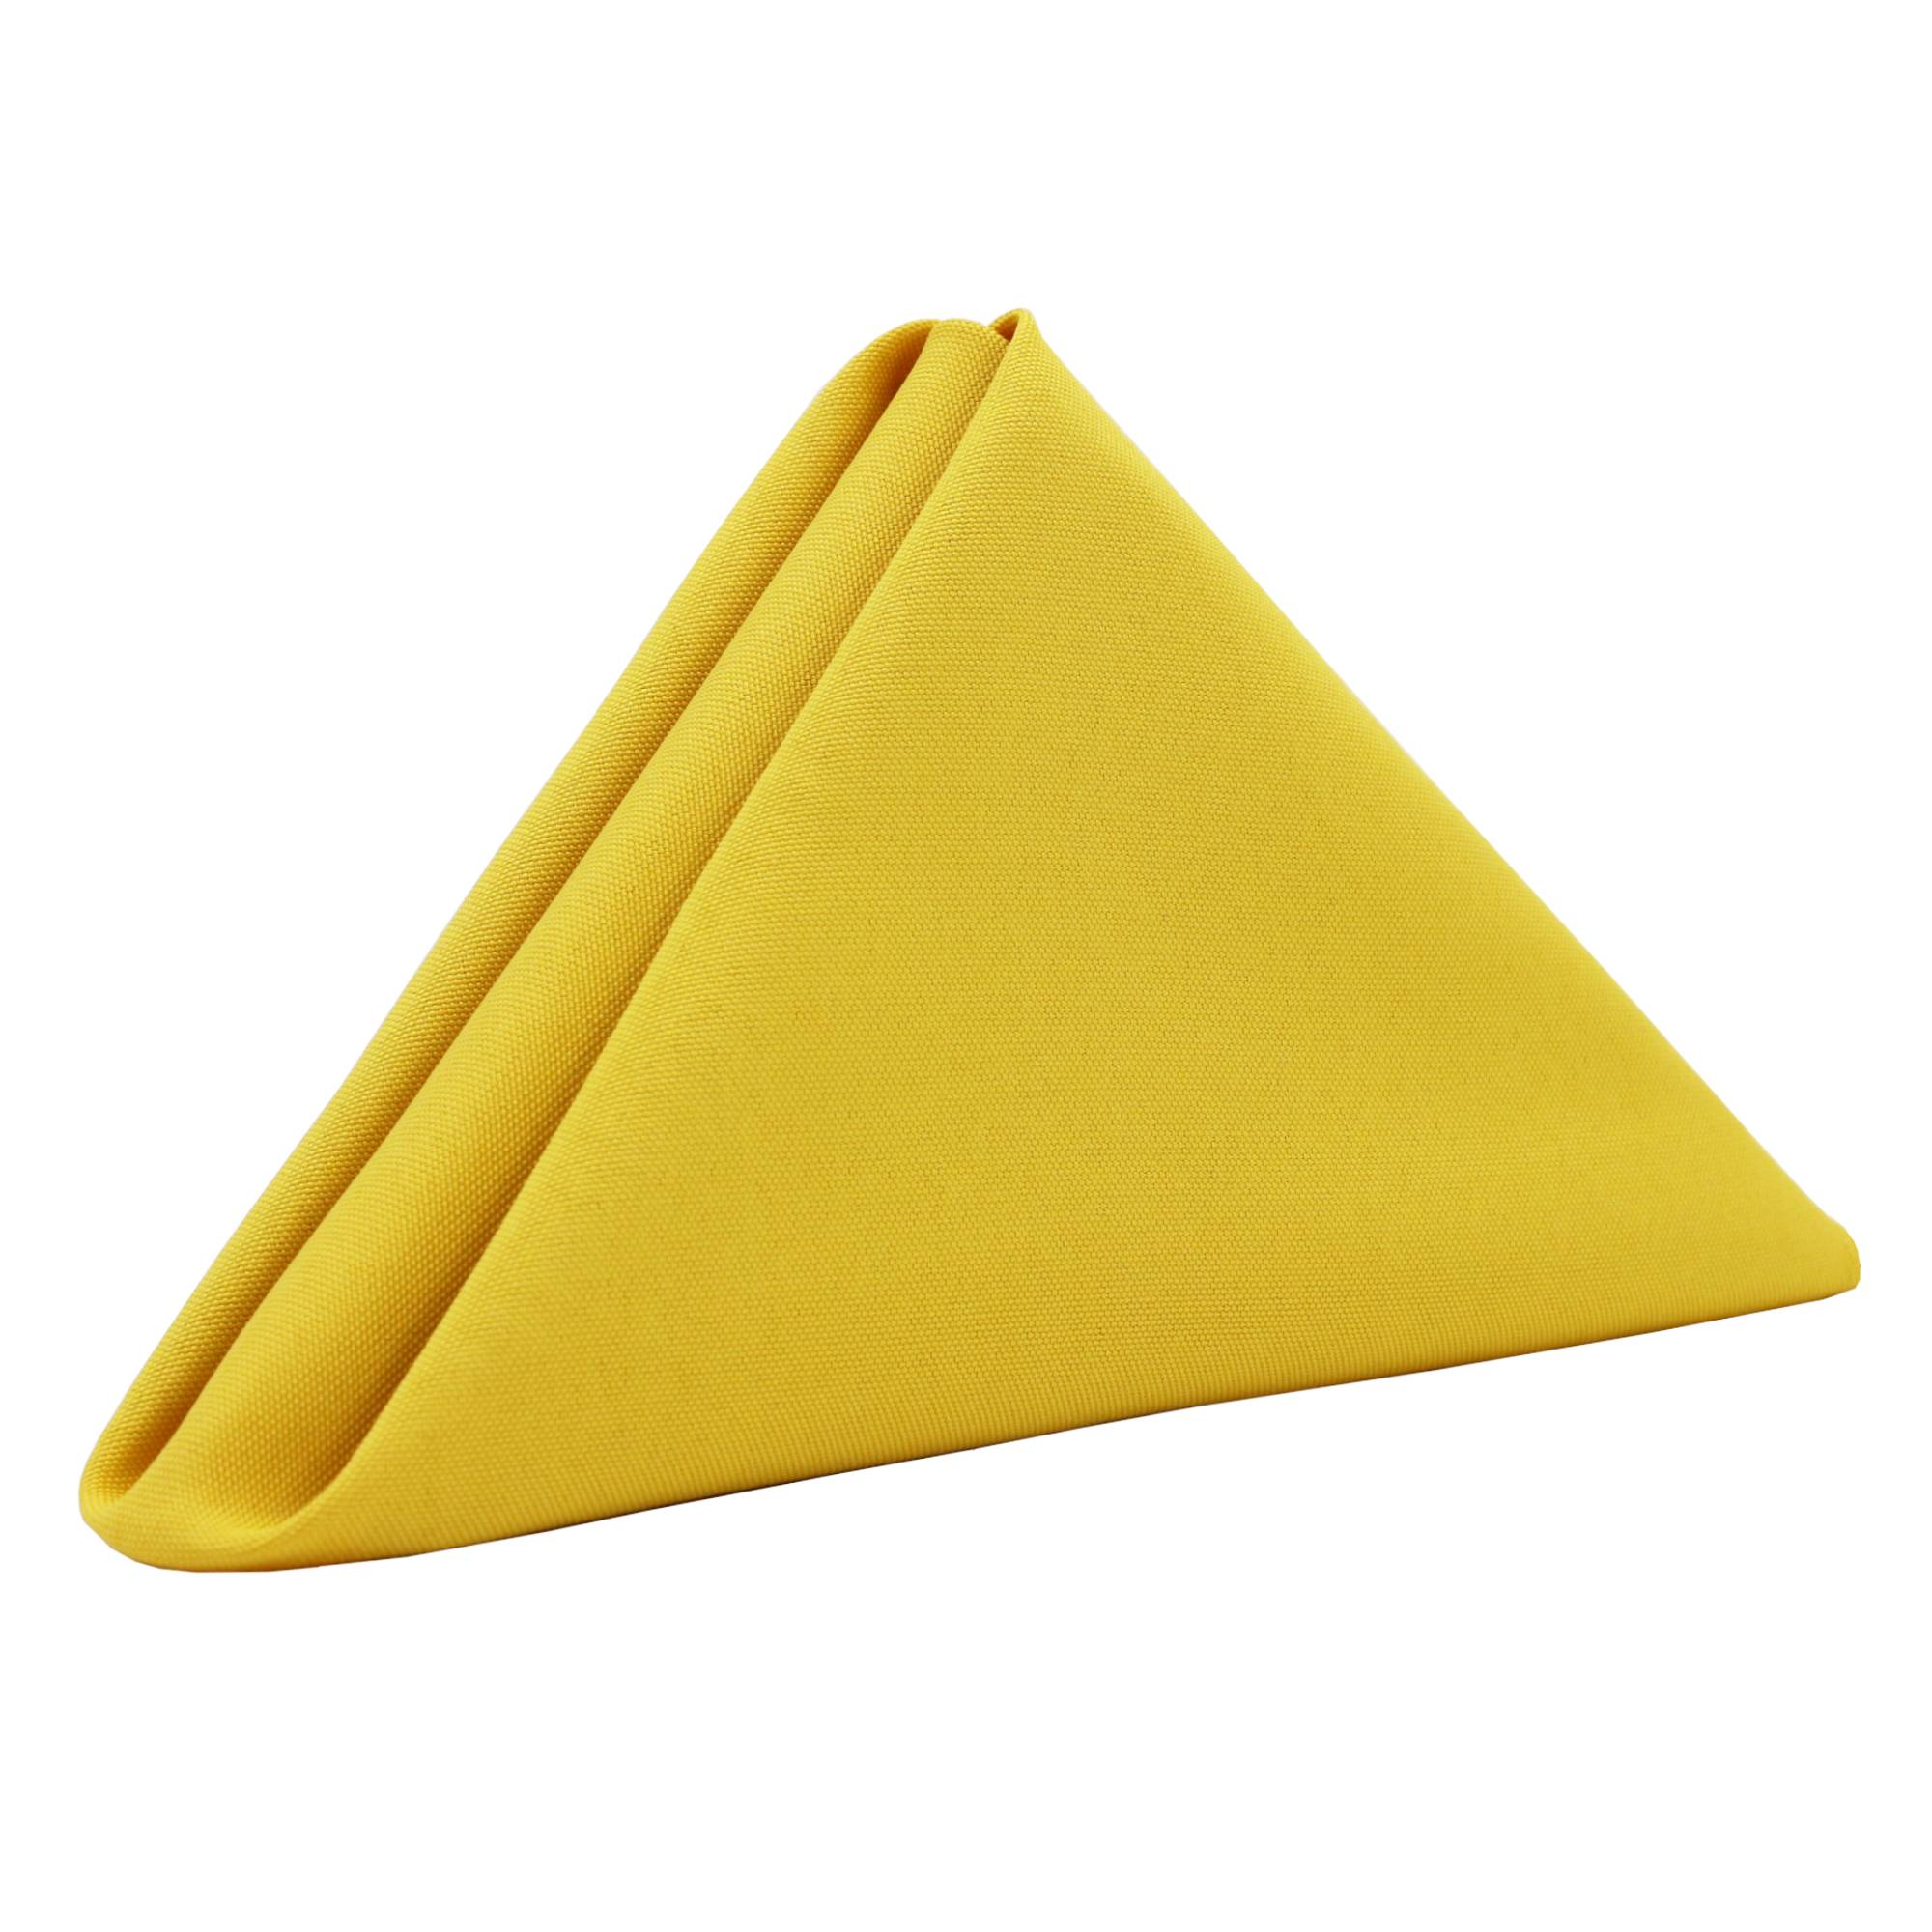 Mustard yellow cloth napkins – My Kitchen Linens